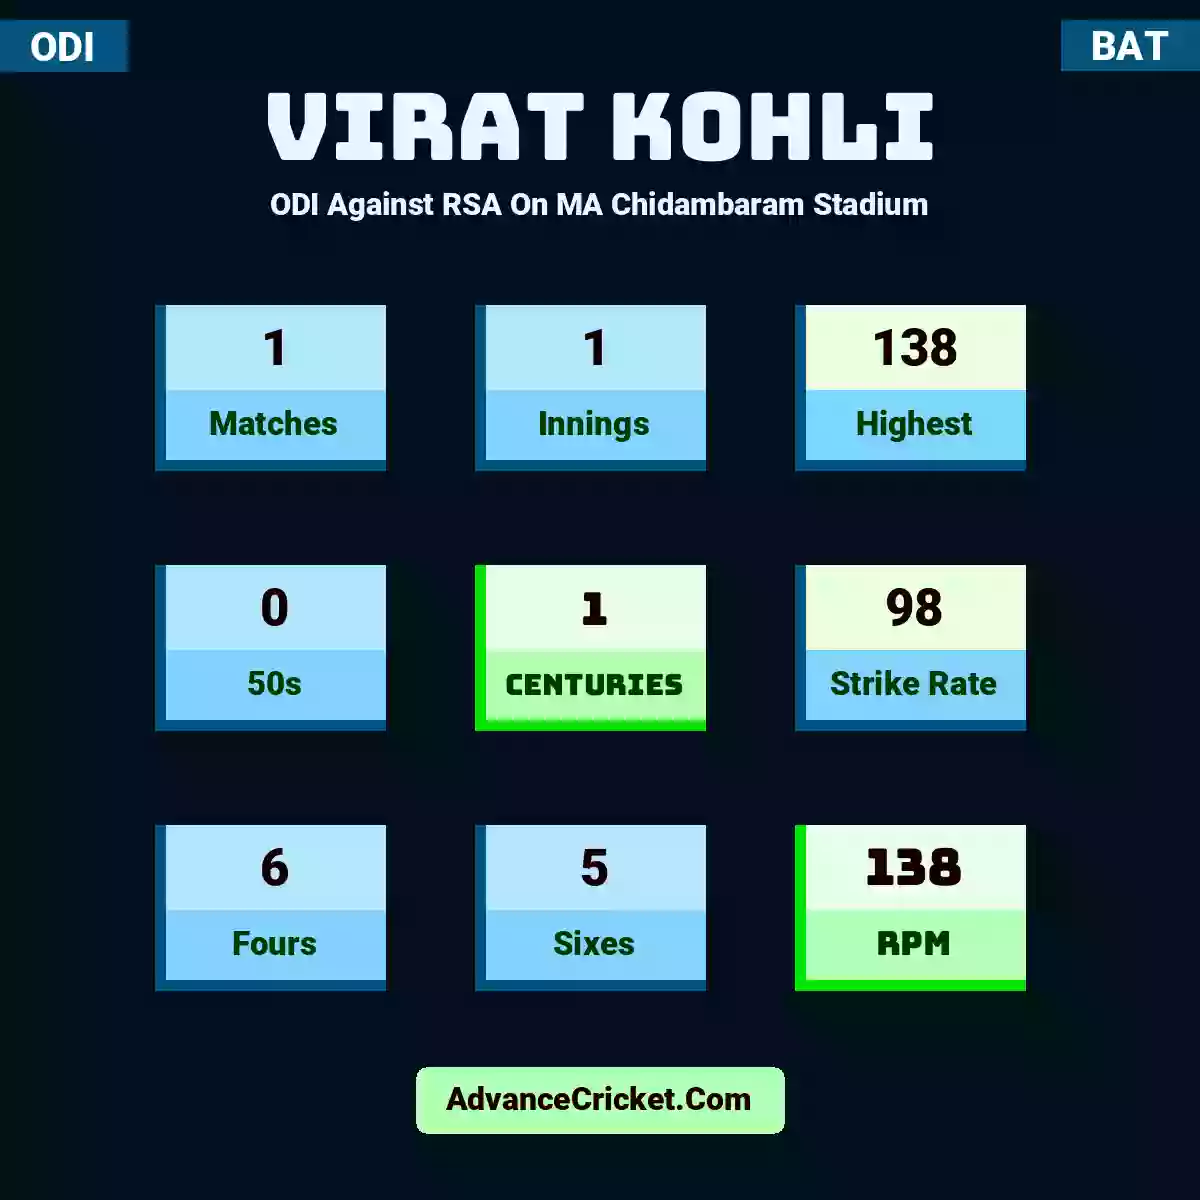 Virat Kohli ODI  Against RSA On MA Chidambaram Stadium, Virat Kohli played 1 matches, scored 138 runs as highest, 0 half-centuries, and 1 centuries, with a strike rate of 98. V.Kohli hit 6 fours and 5 sixes, with an RPM of 138.